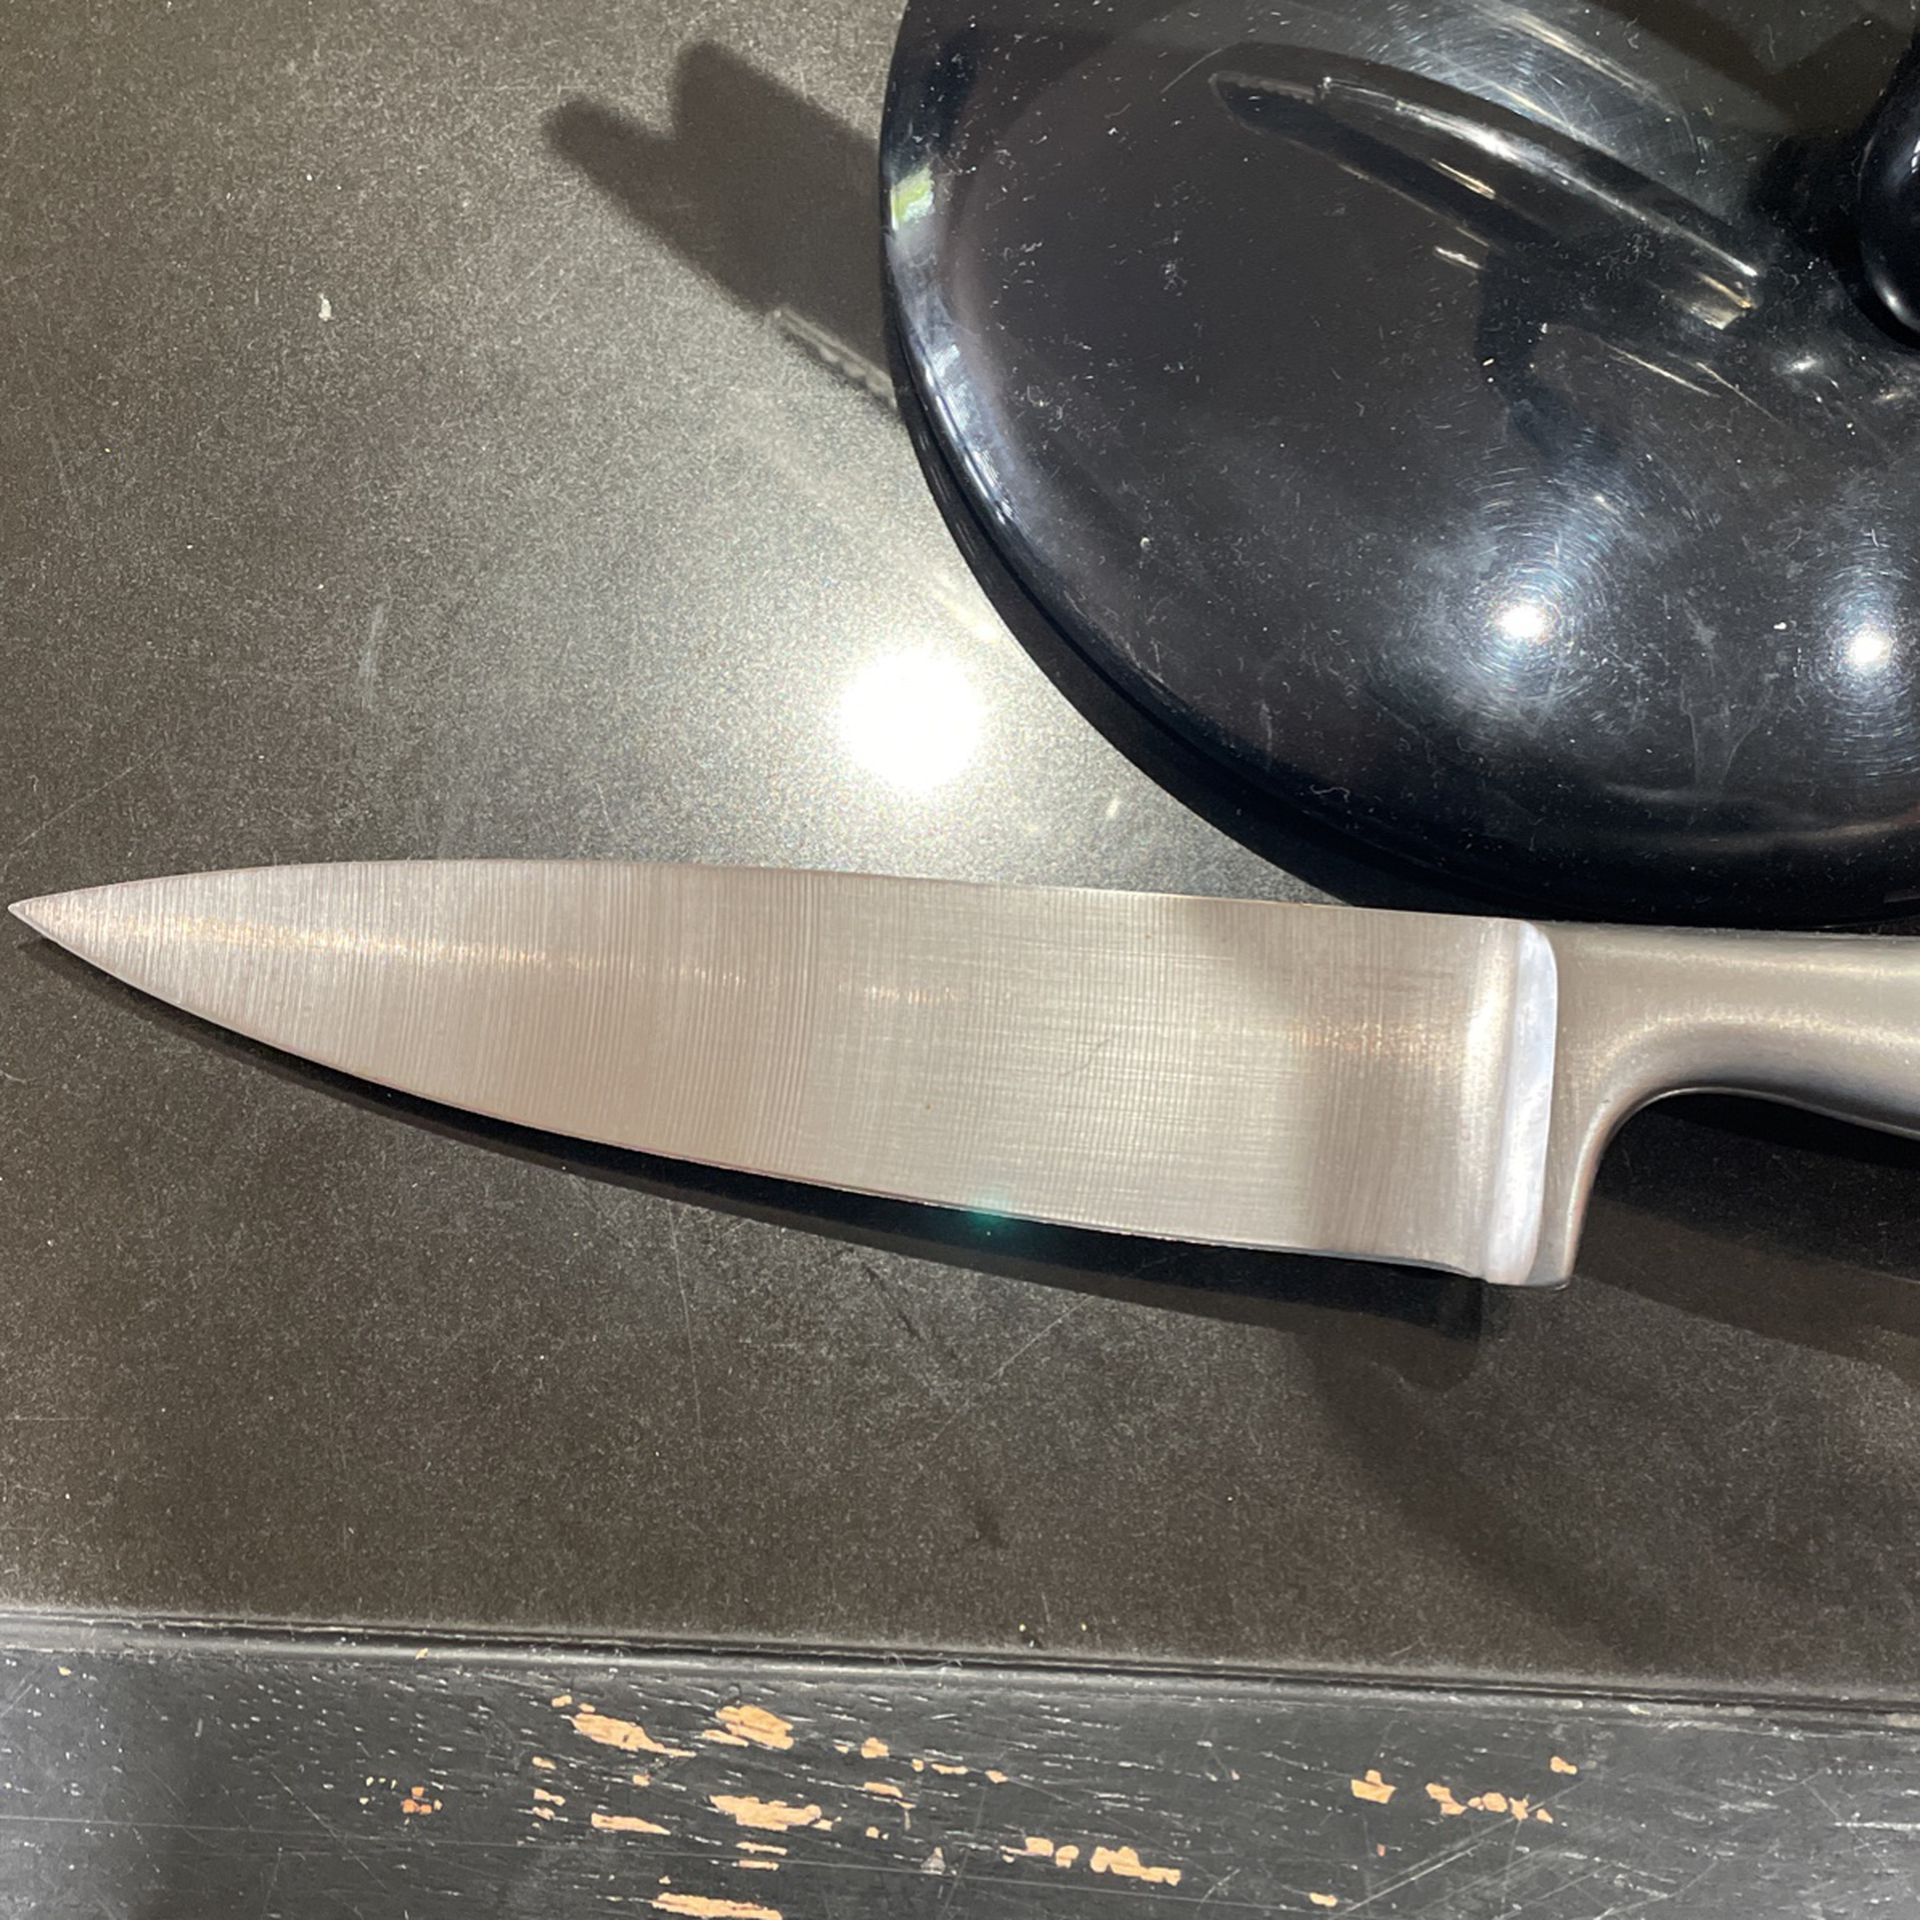 Deik Knife Sets, 15 Pieces German Stainless Steel Kitchen Knife Block Sets  for Sale in Altadena, CA - OfferUp